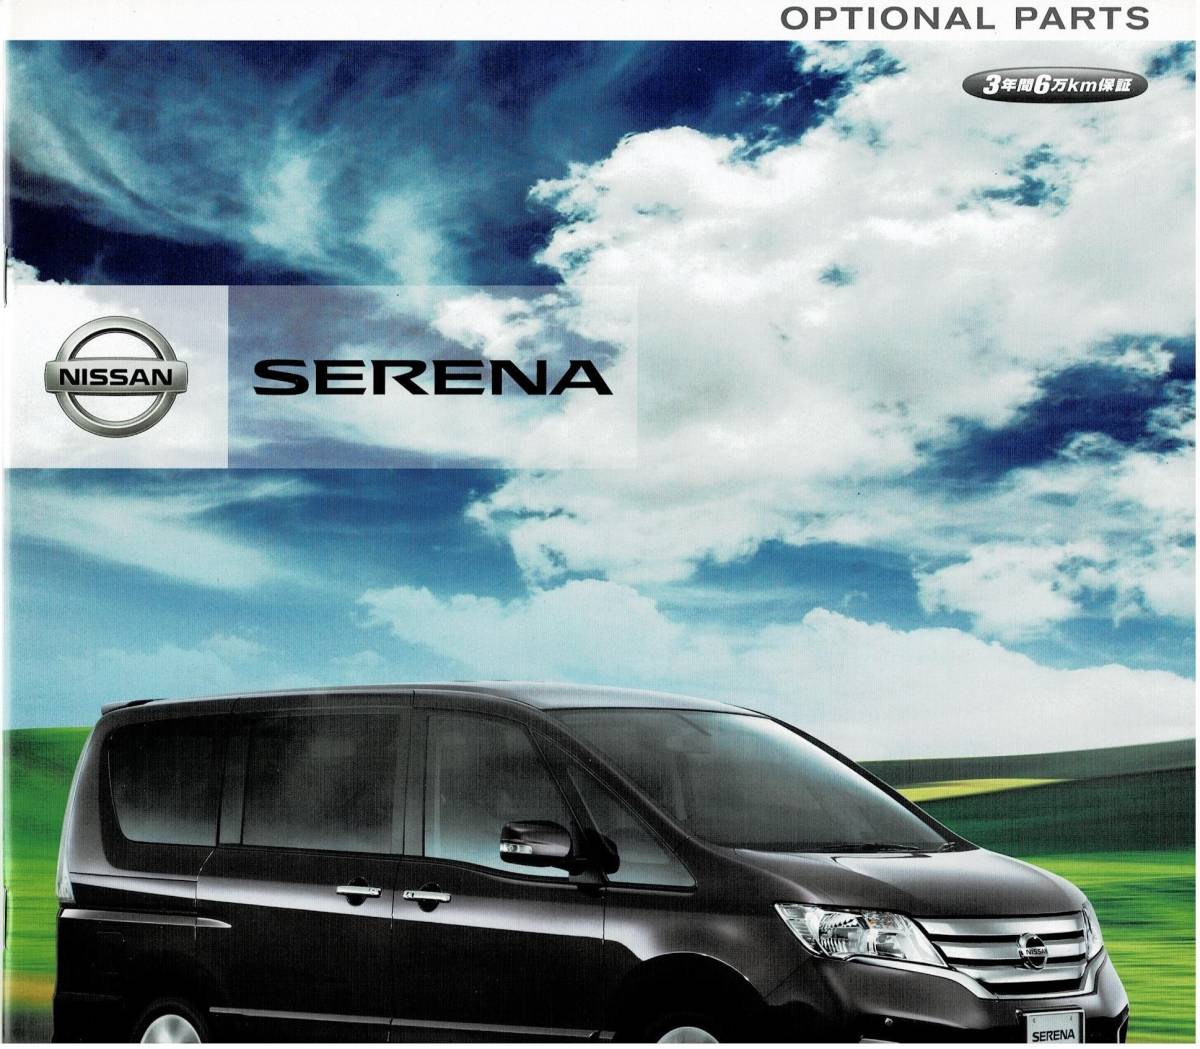  Nissan C26 Serena catalog +OP (2012 year 8 month & 2010 year 11 month )